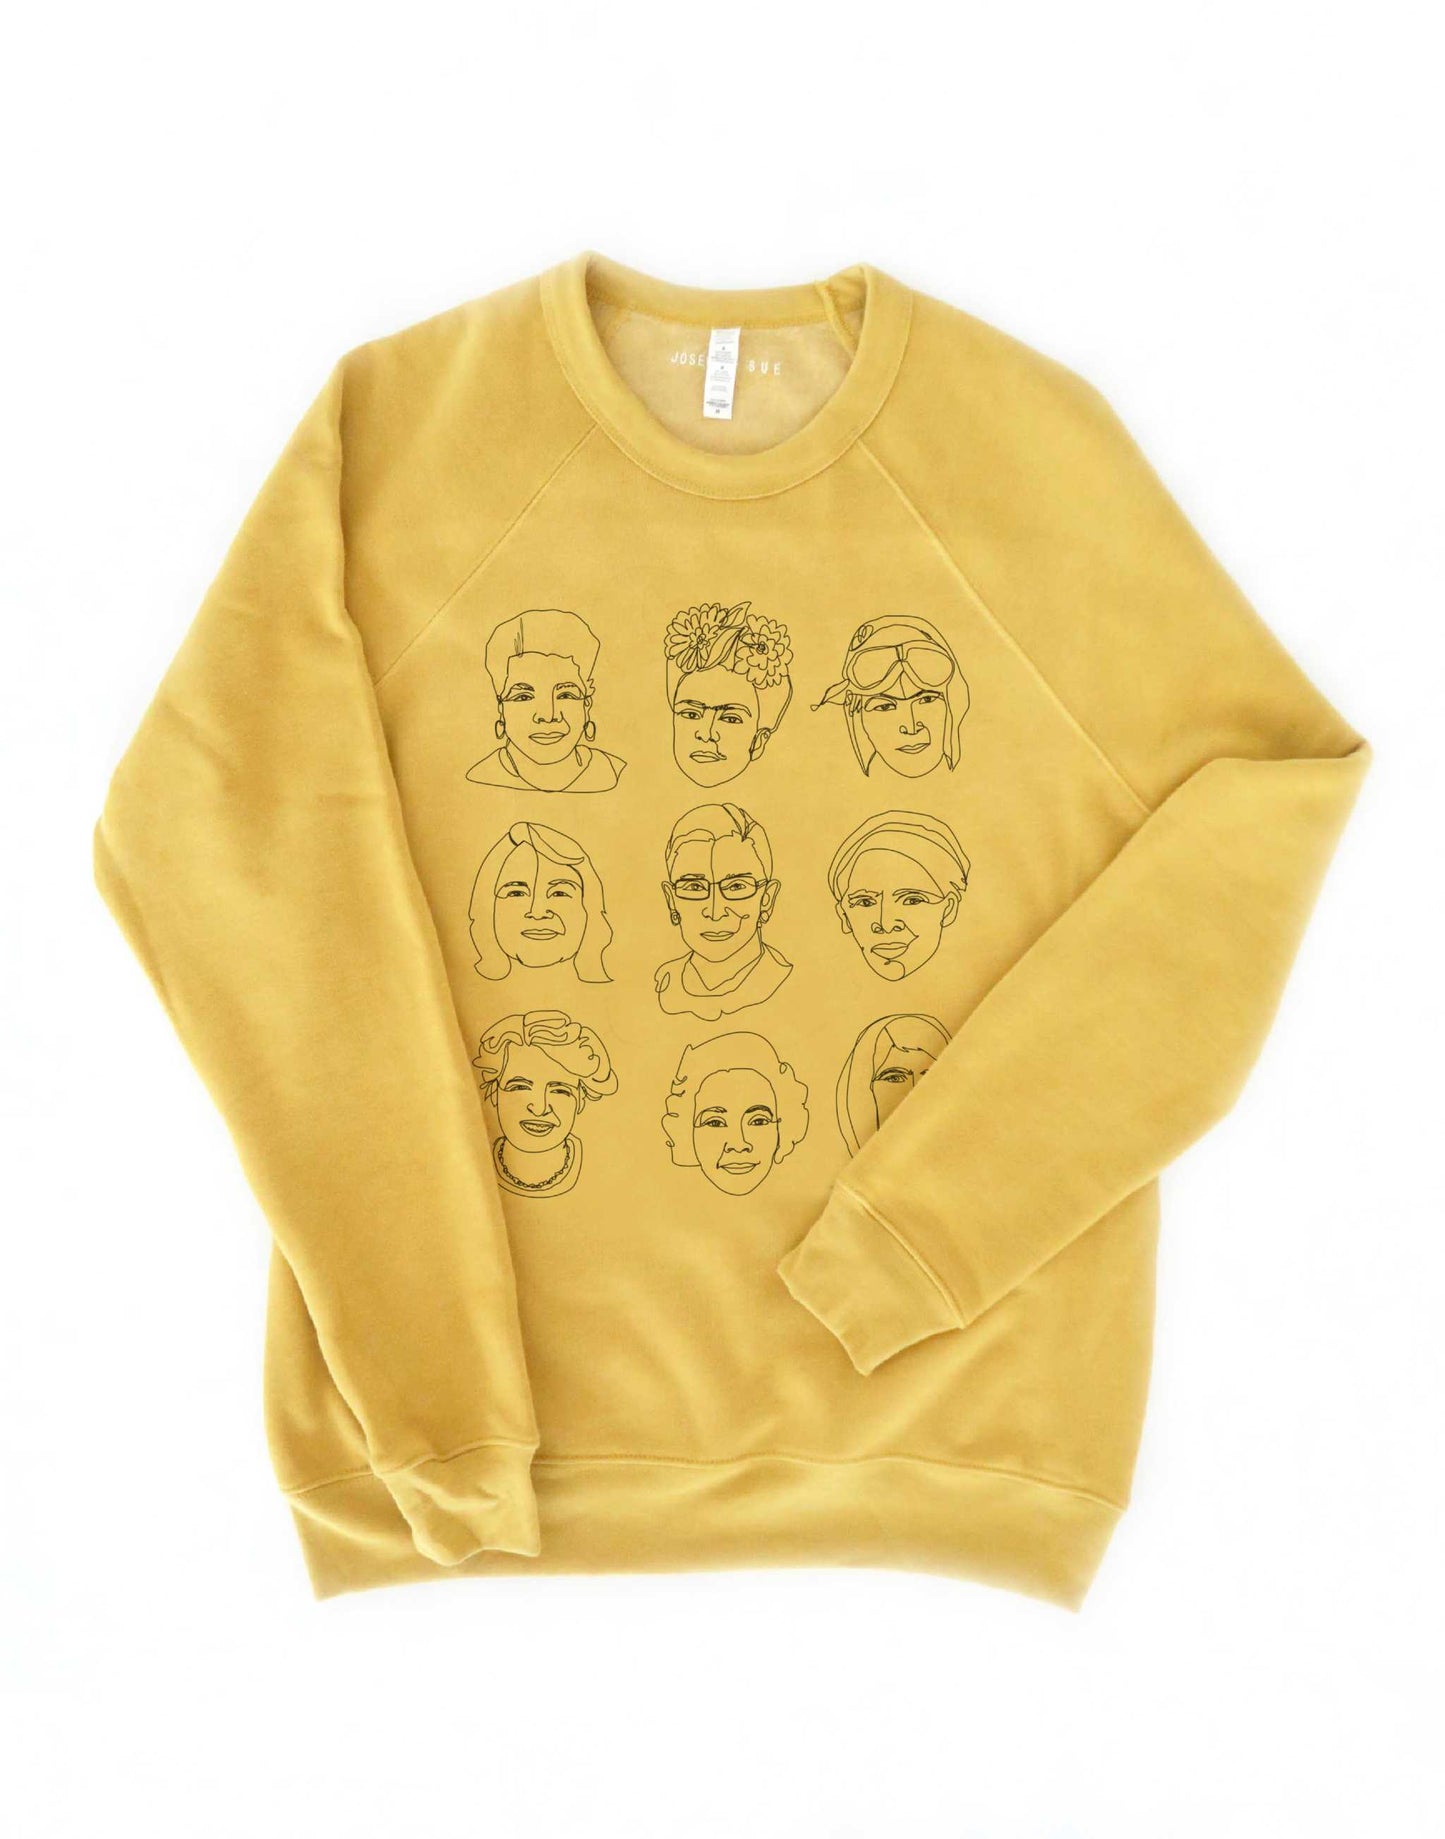 Sale AS IS- The Original 3x3 Badasses Sweater, Heather Mustard, MEDIUM